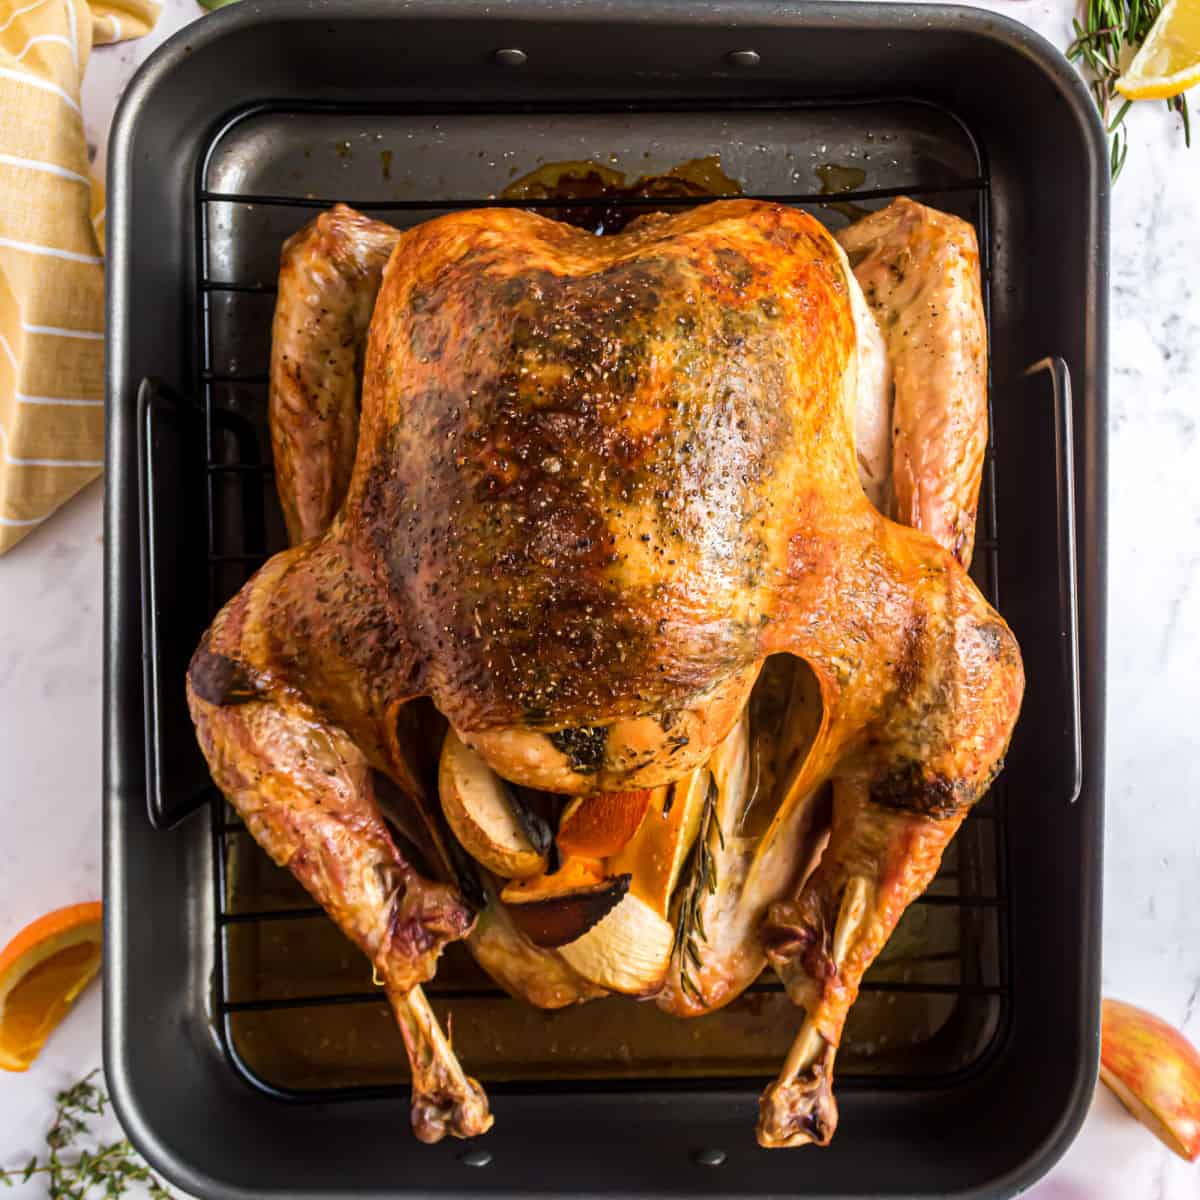 https://www.shugarysweets.com/wp-content/uploads/2021/11/thanksgiving-turkey-recipe.jpg